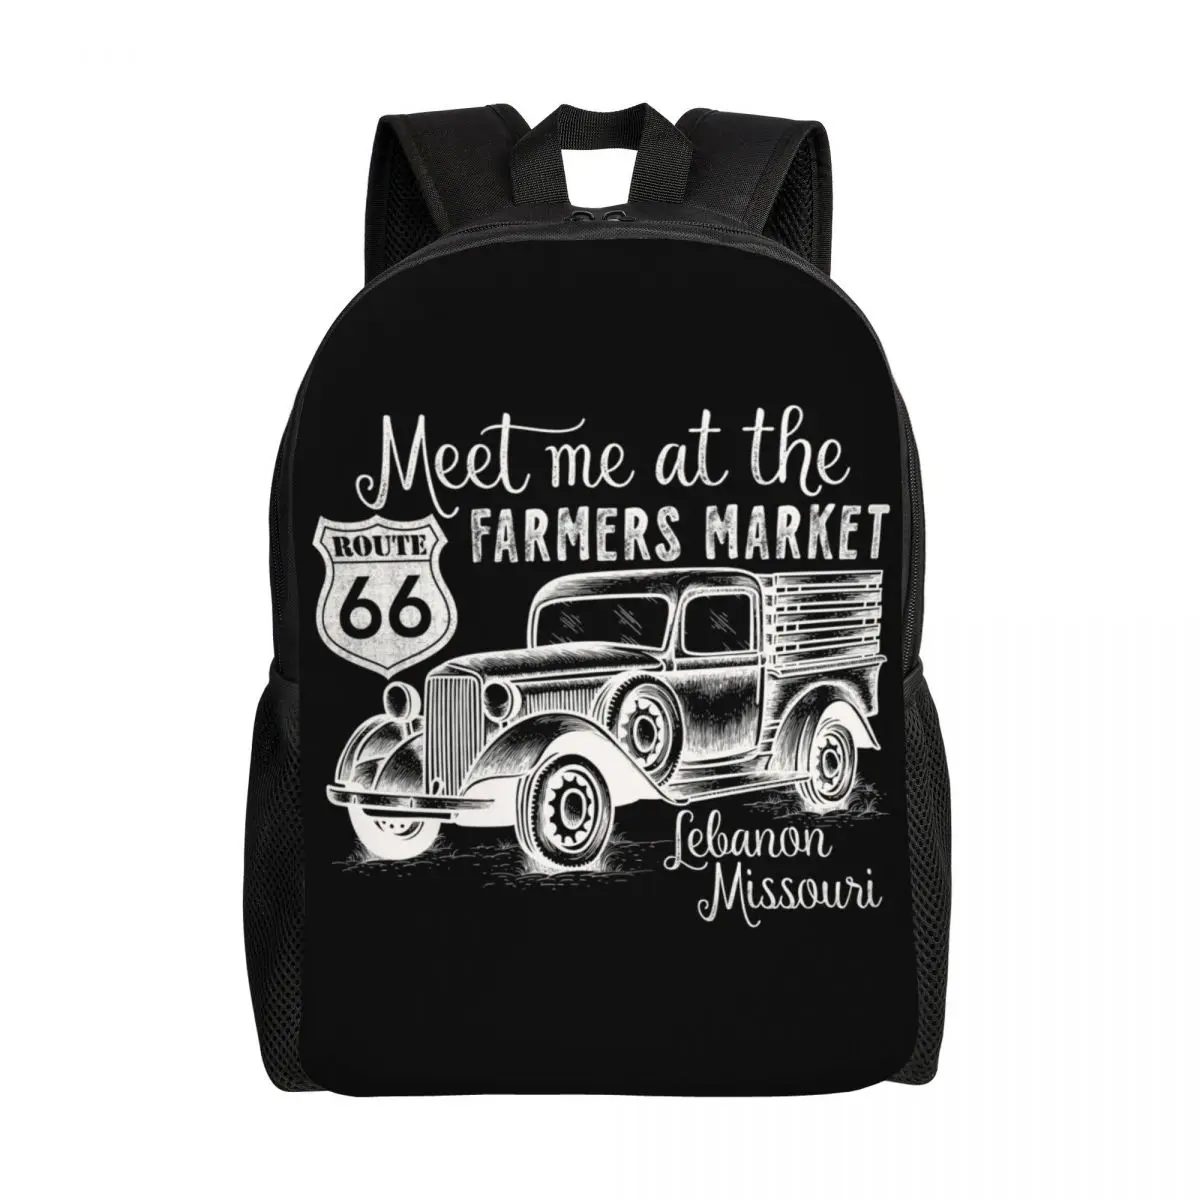 

Meet Me At The Route 66 фермерский рынок Ретро винтажная продукция грузовик рюкзак книжная Сумка для колледжа школьная улица